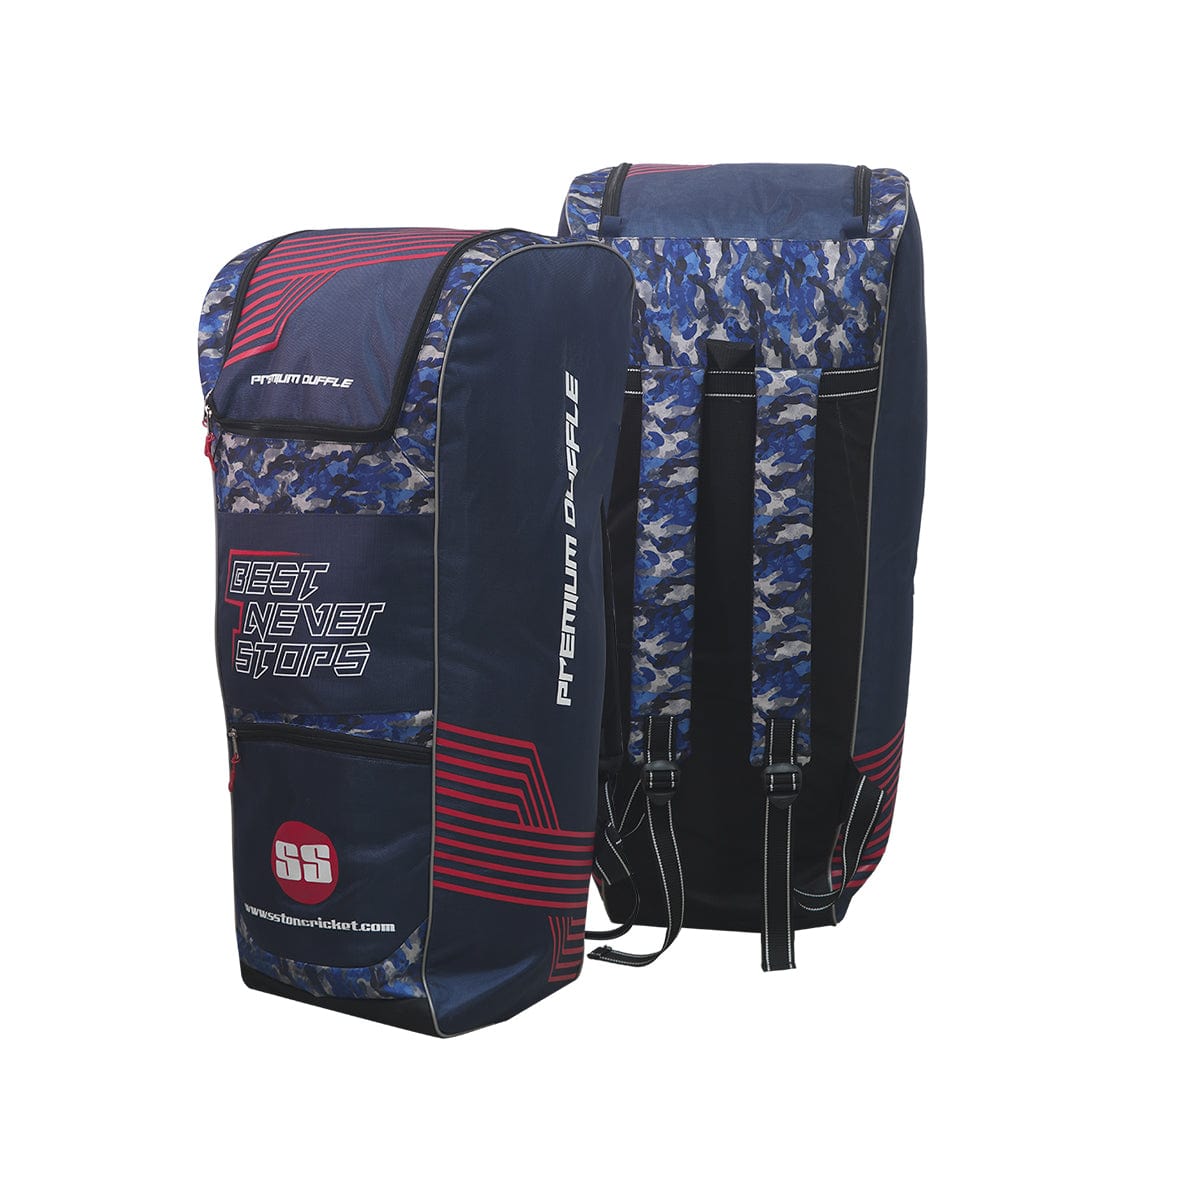 SS Cricket Bags SS Premium Duffle Cricket Kit Bag (6 Bat Sleeve)